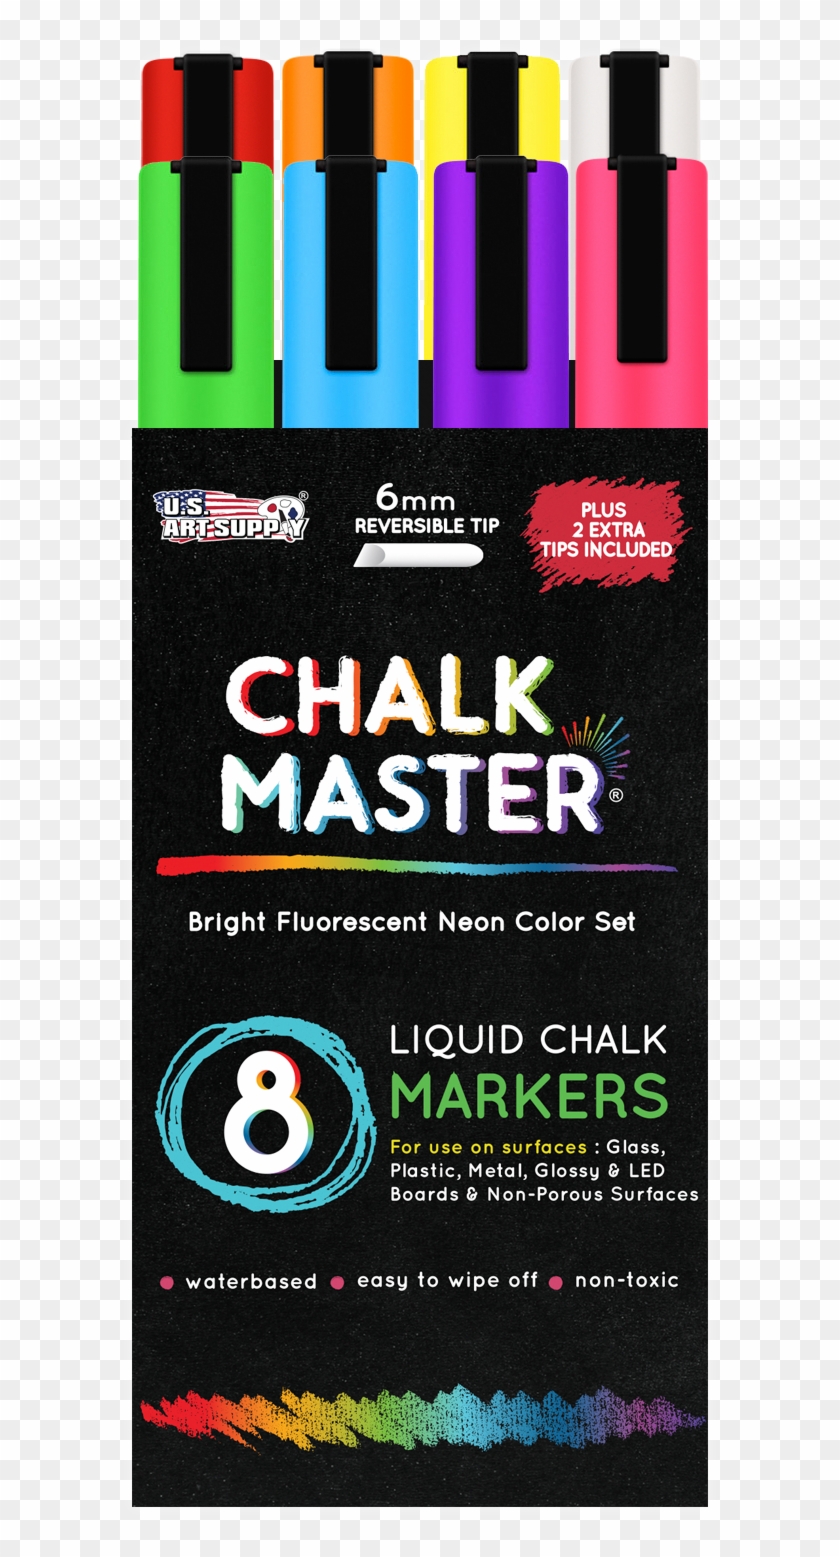 8 Bright Fluorescent Neon Liquid Chalk Marker Set - Liquid Chalk Markers Clipart #3256316